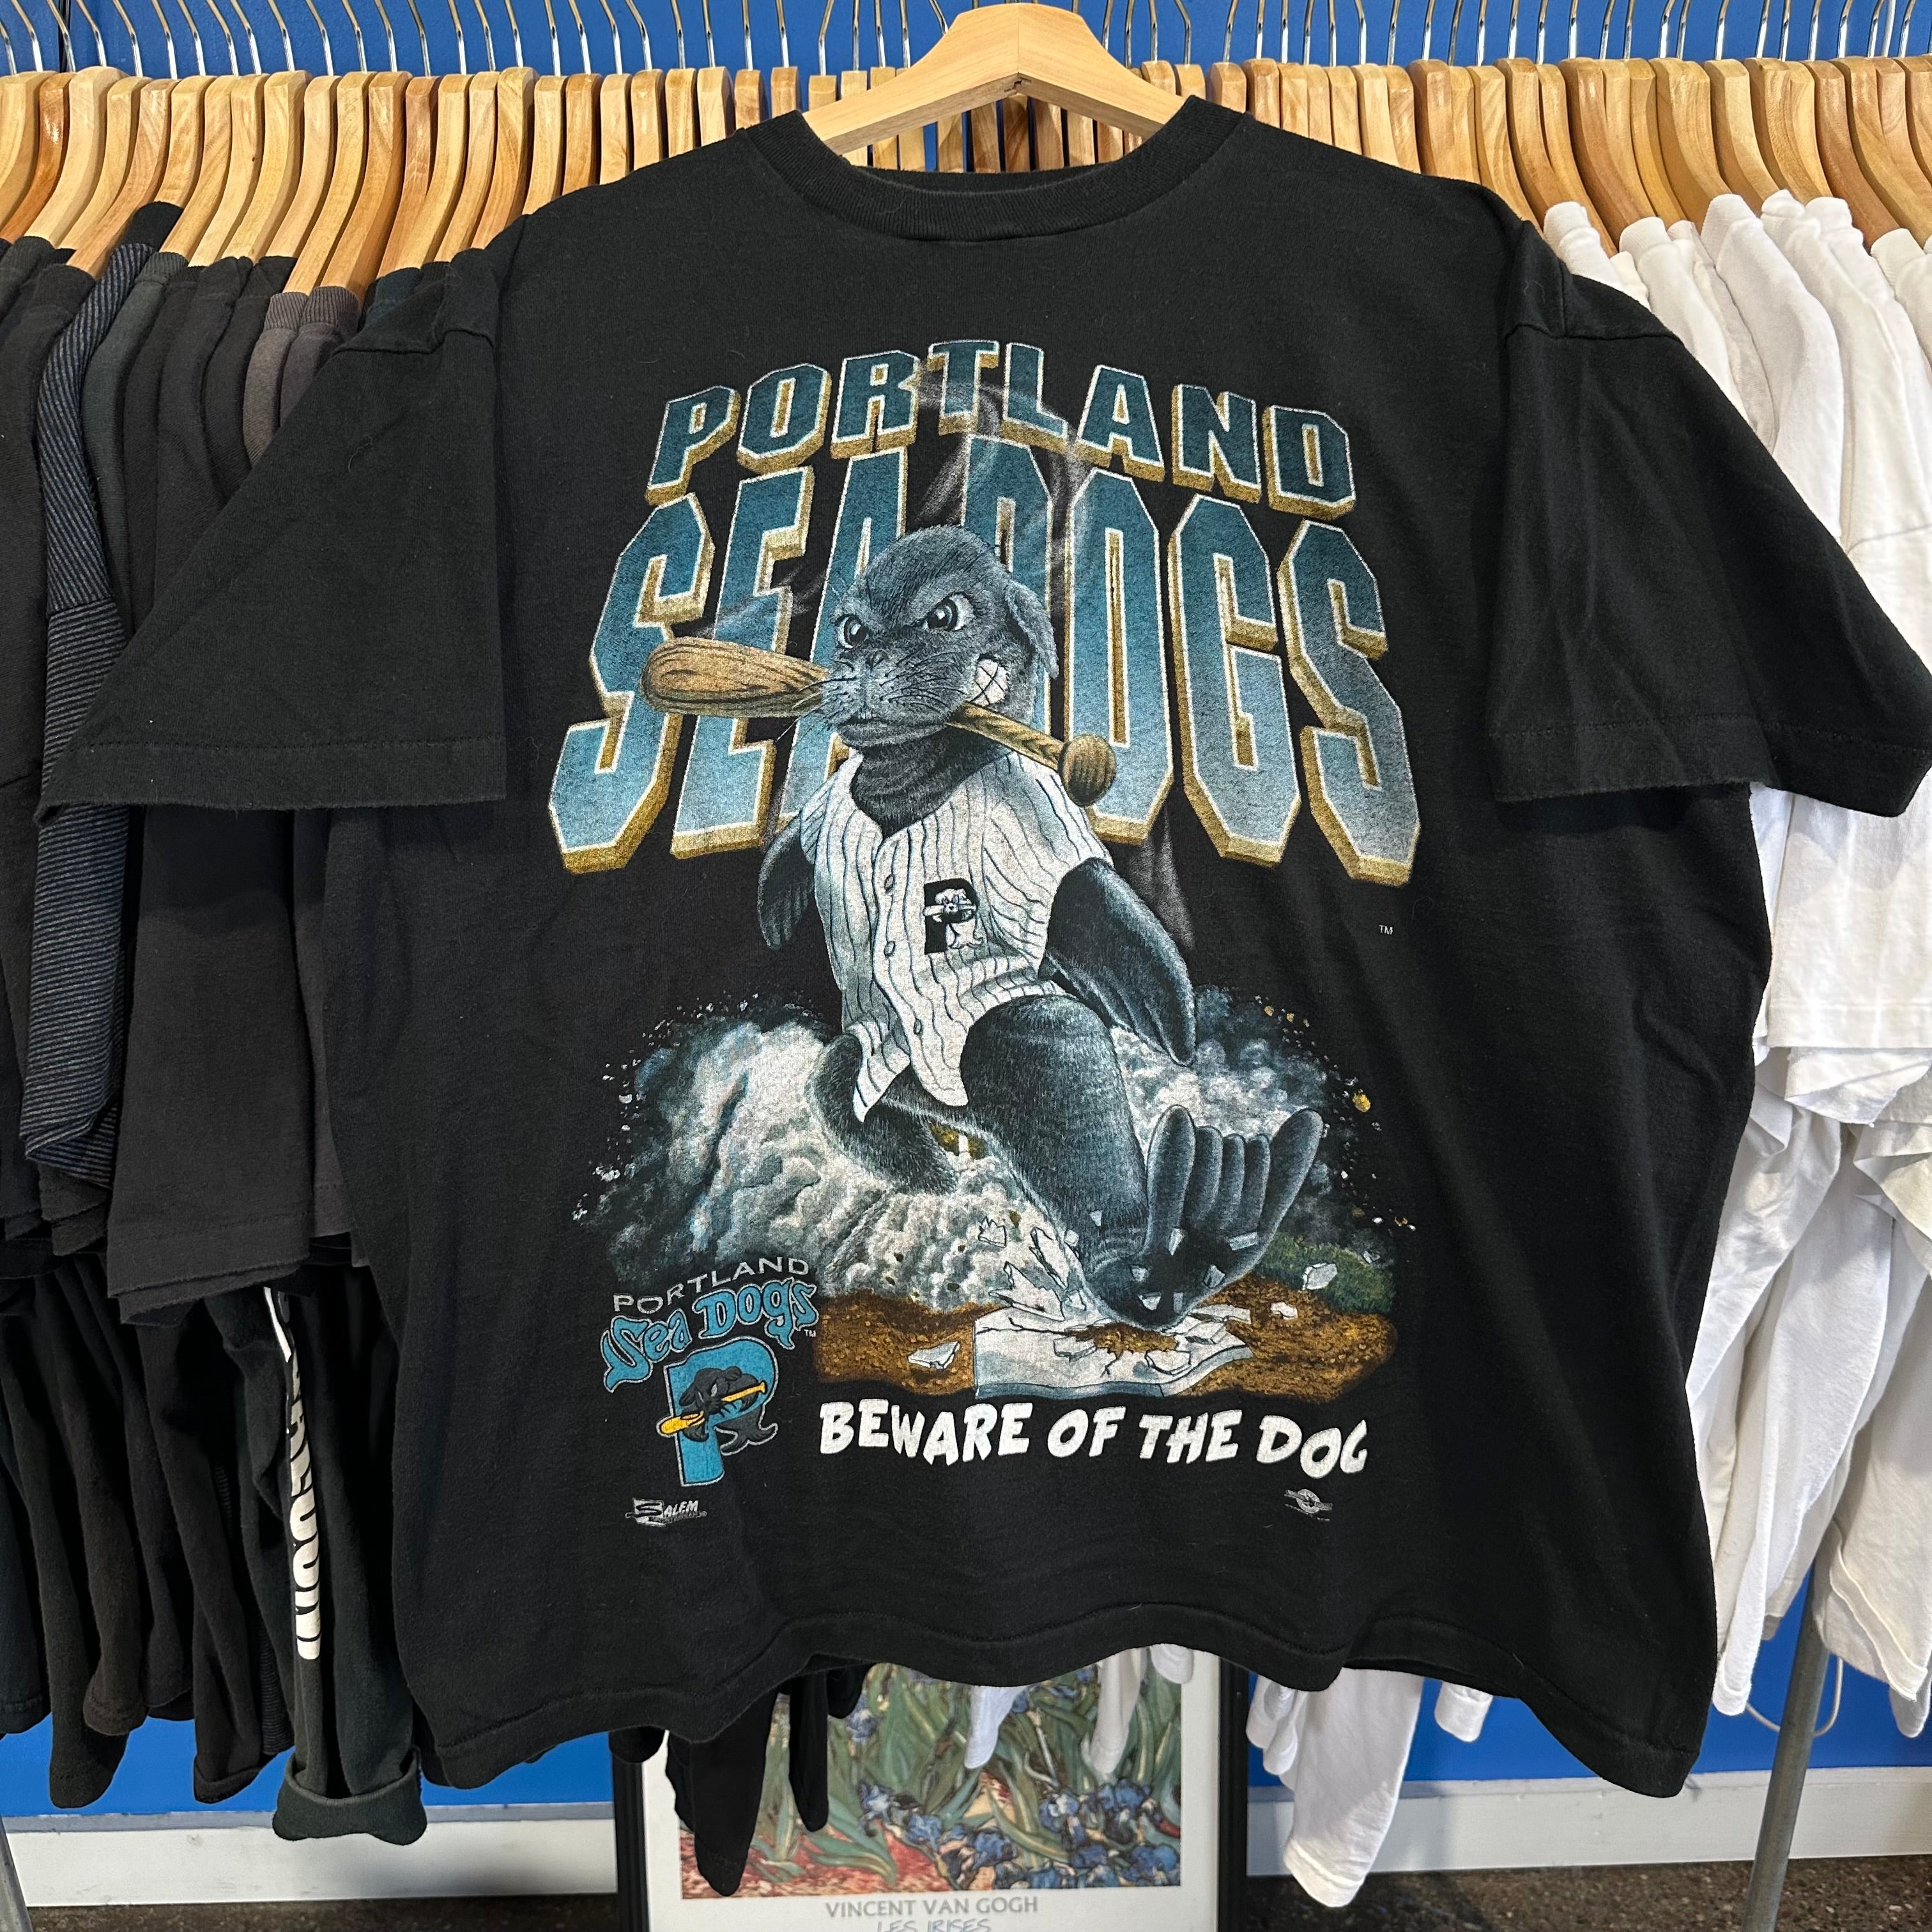 Portland Seadogs T-Shirt